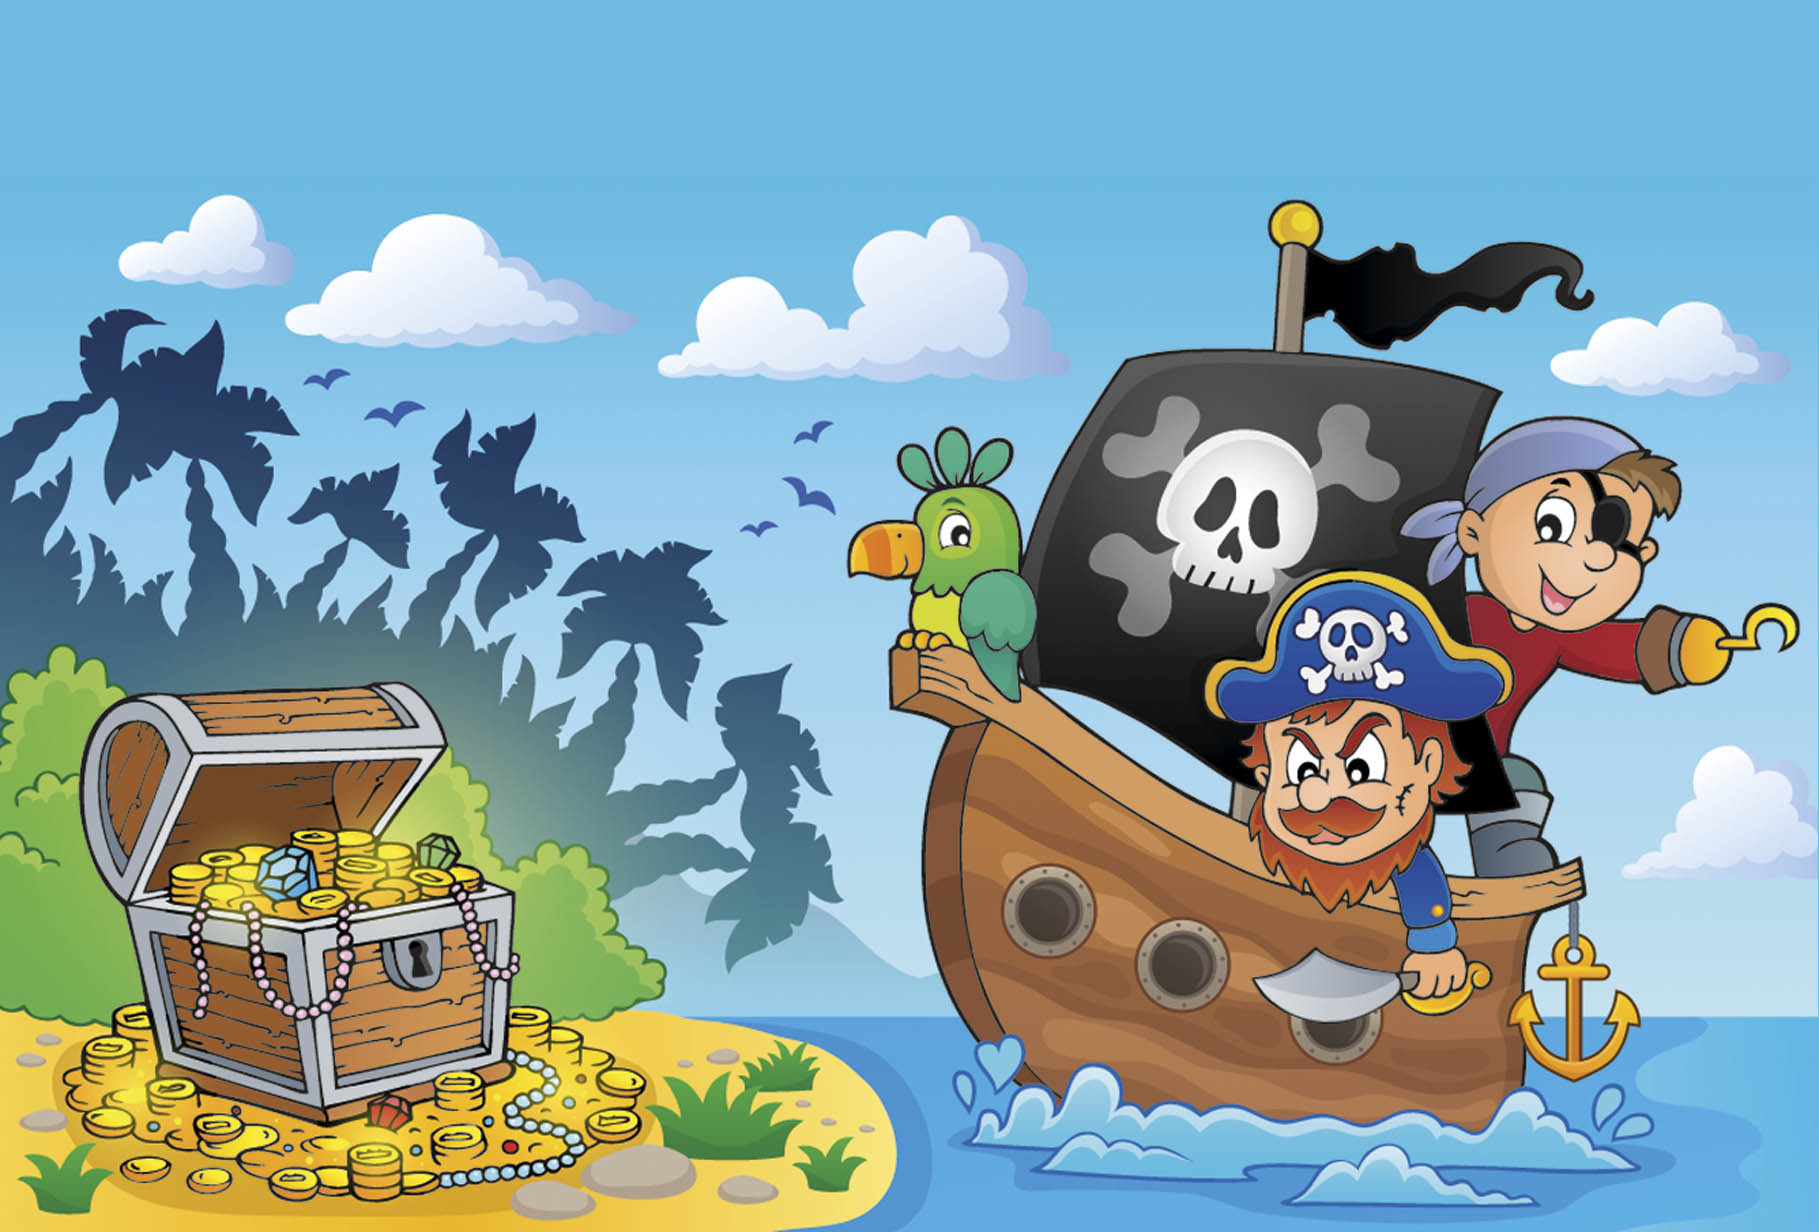 Pirates Ahoy!: FUNomusica Family Concert